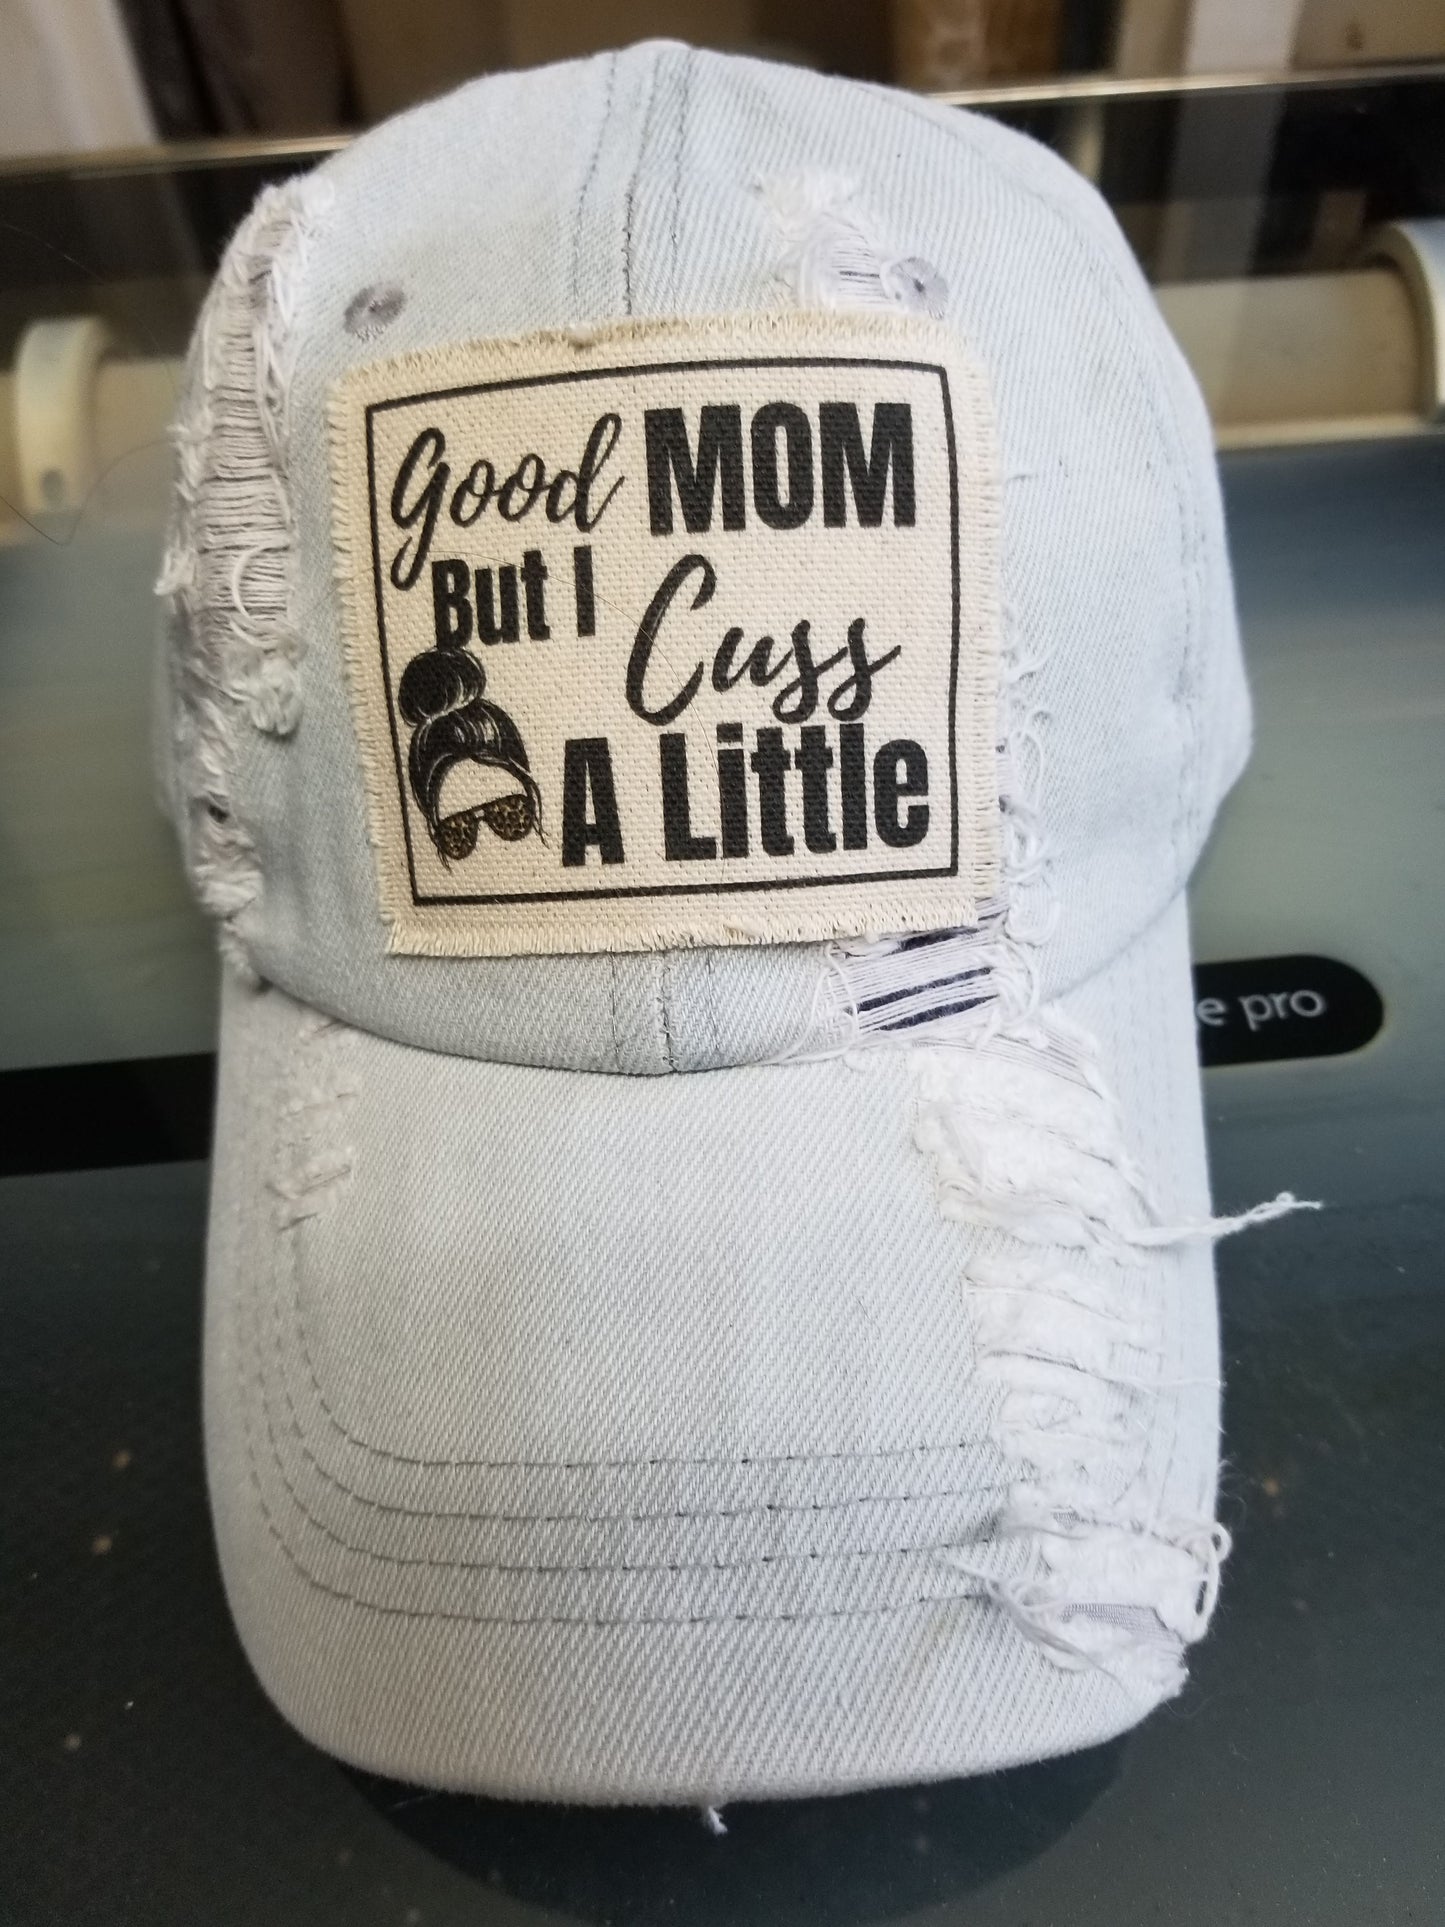 Good mom but I cuss a little hat